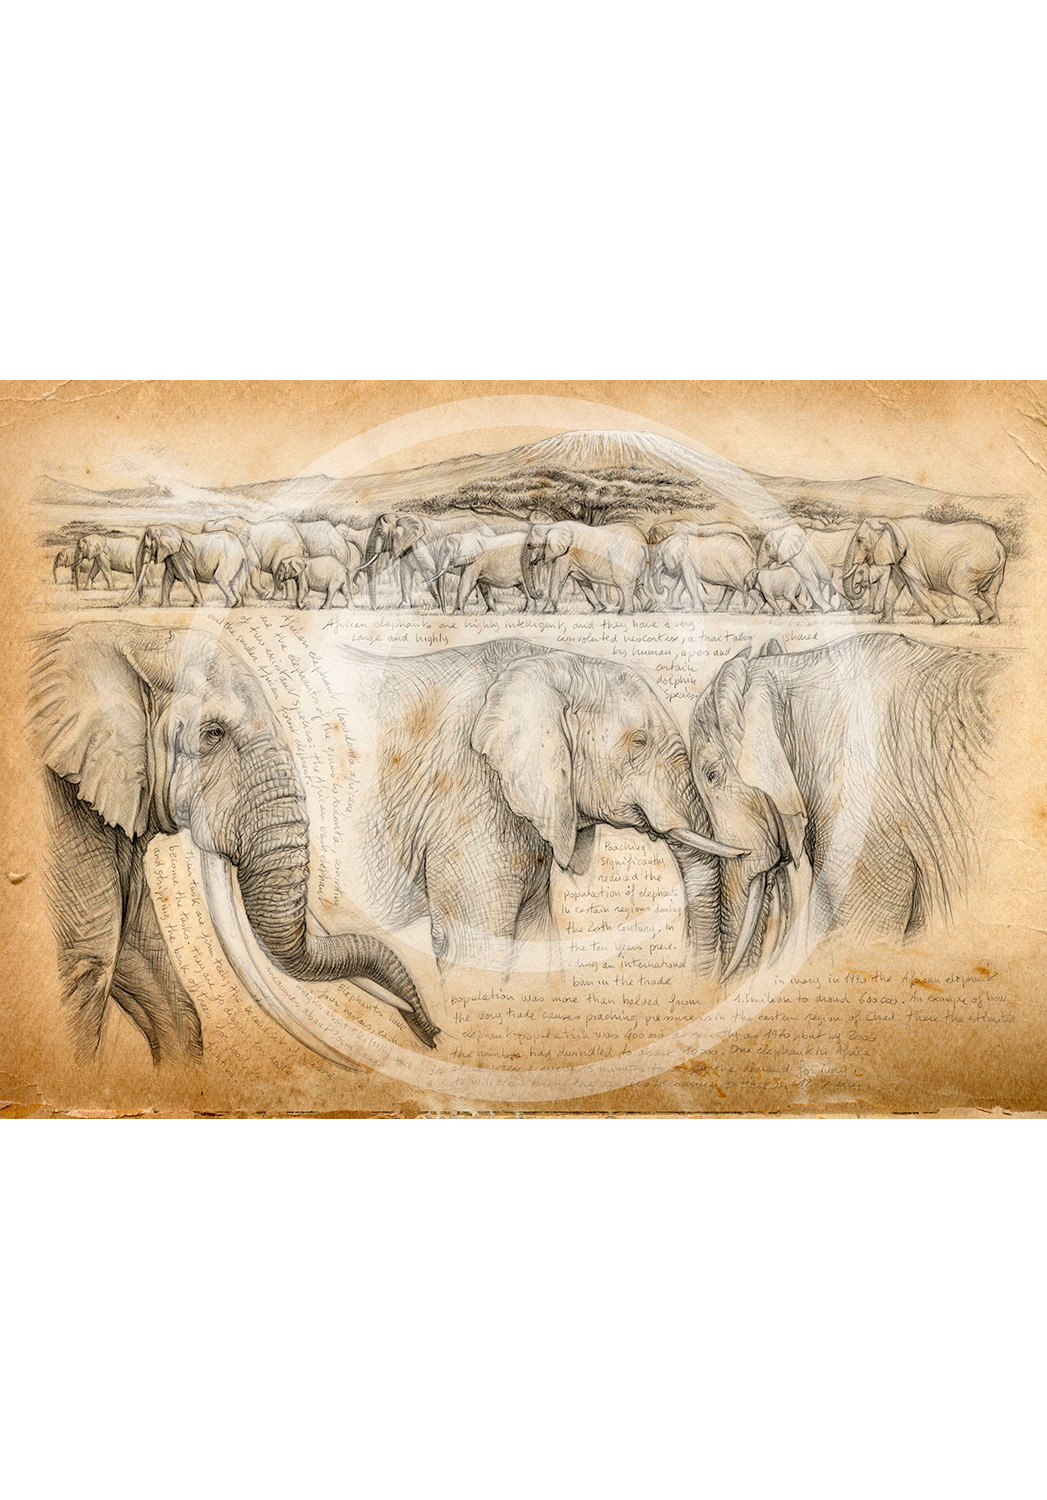 Marcello-art: Exclusive work 246 - H&H Big Five Elephant